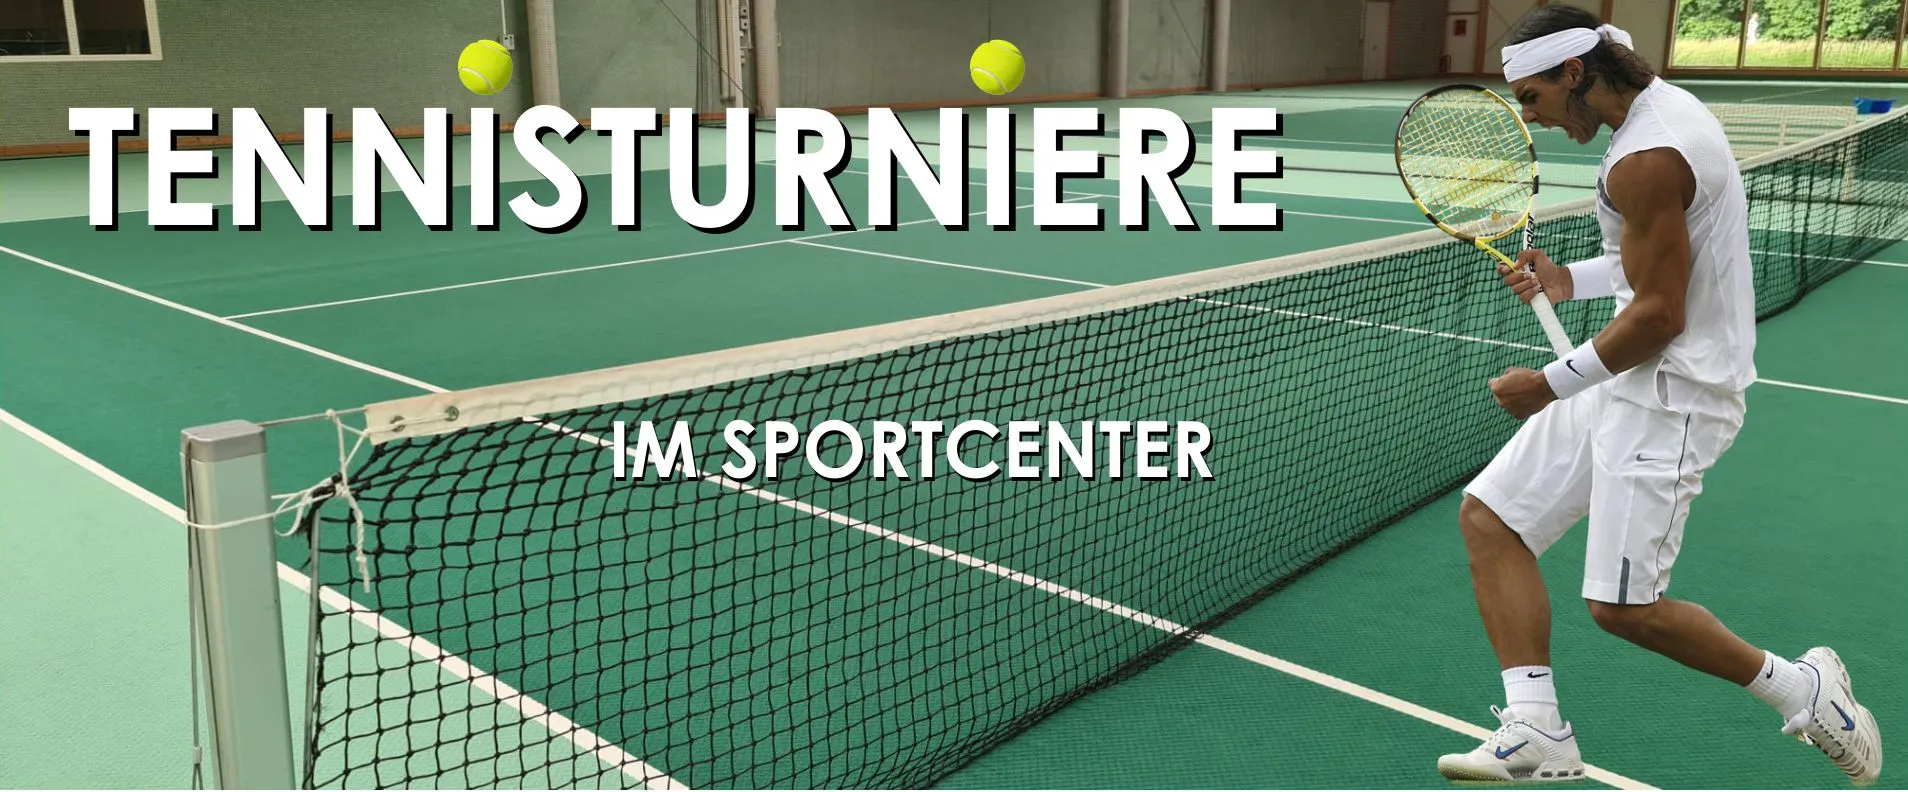 Sportcenter Suhl Tennis